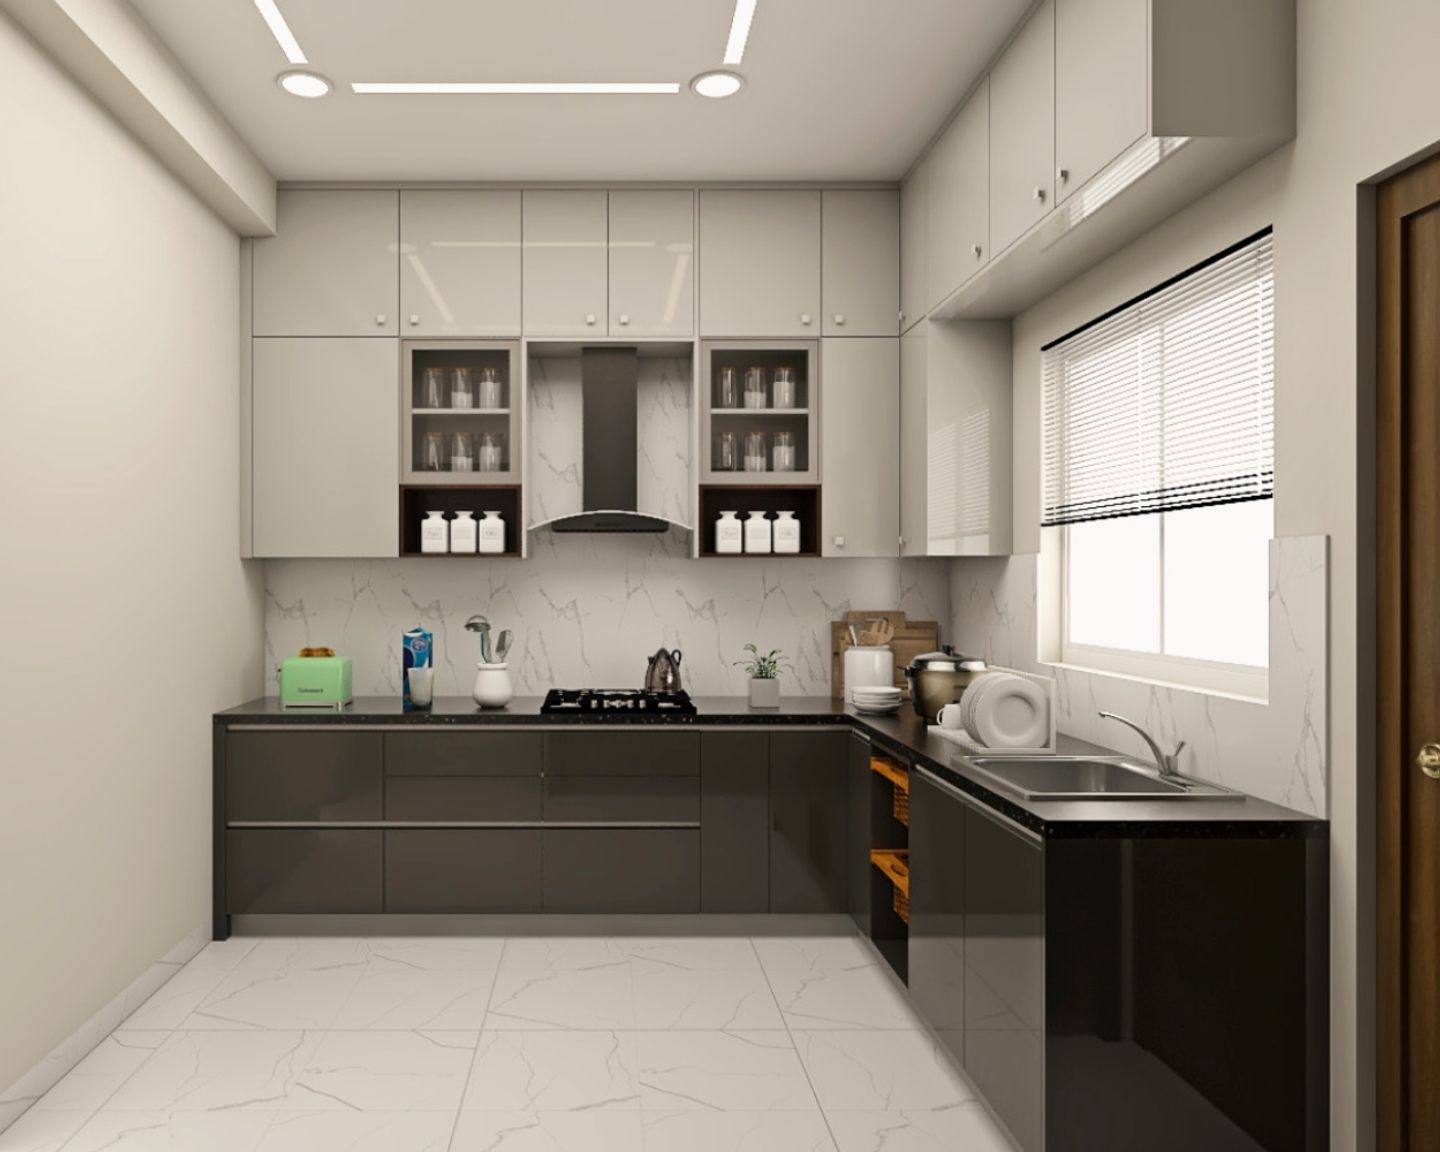 L-Shaped Modular Kitchen Design With A Granite Countertop - Livspace